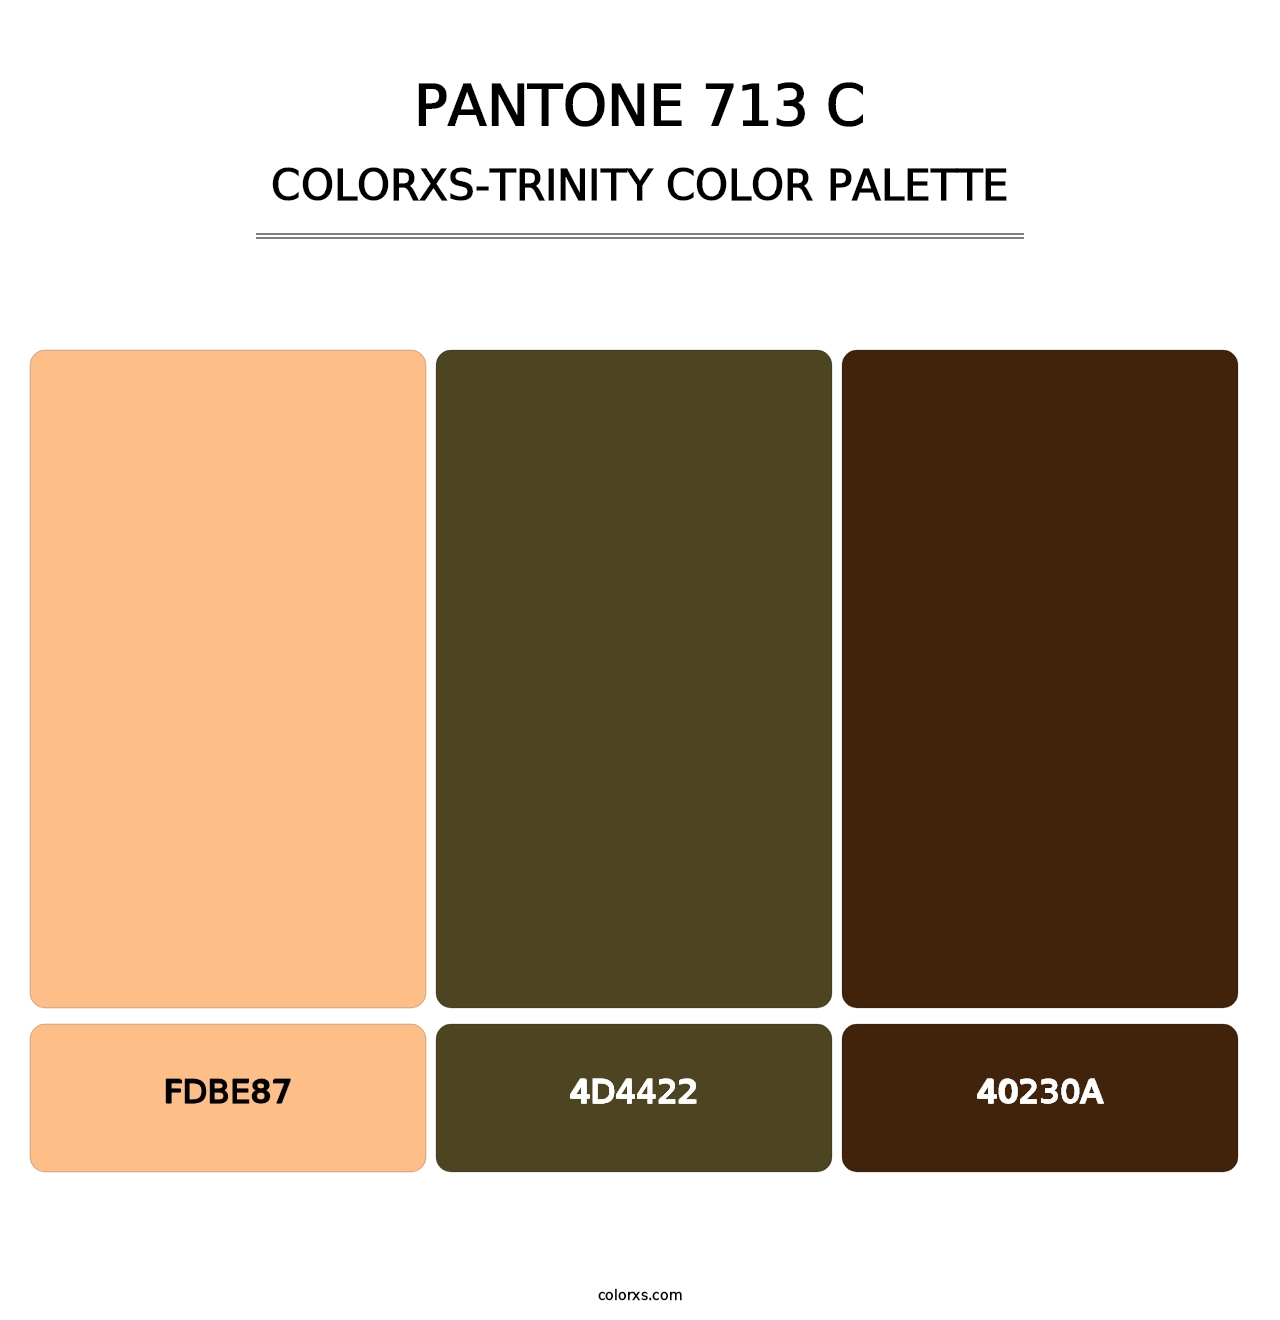 PANTONE 713 C - Colorxs Trinity Palette